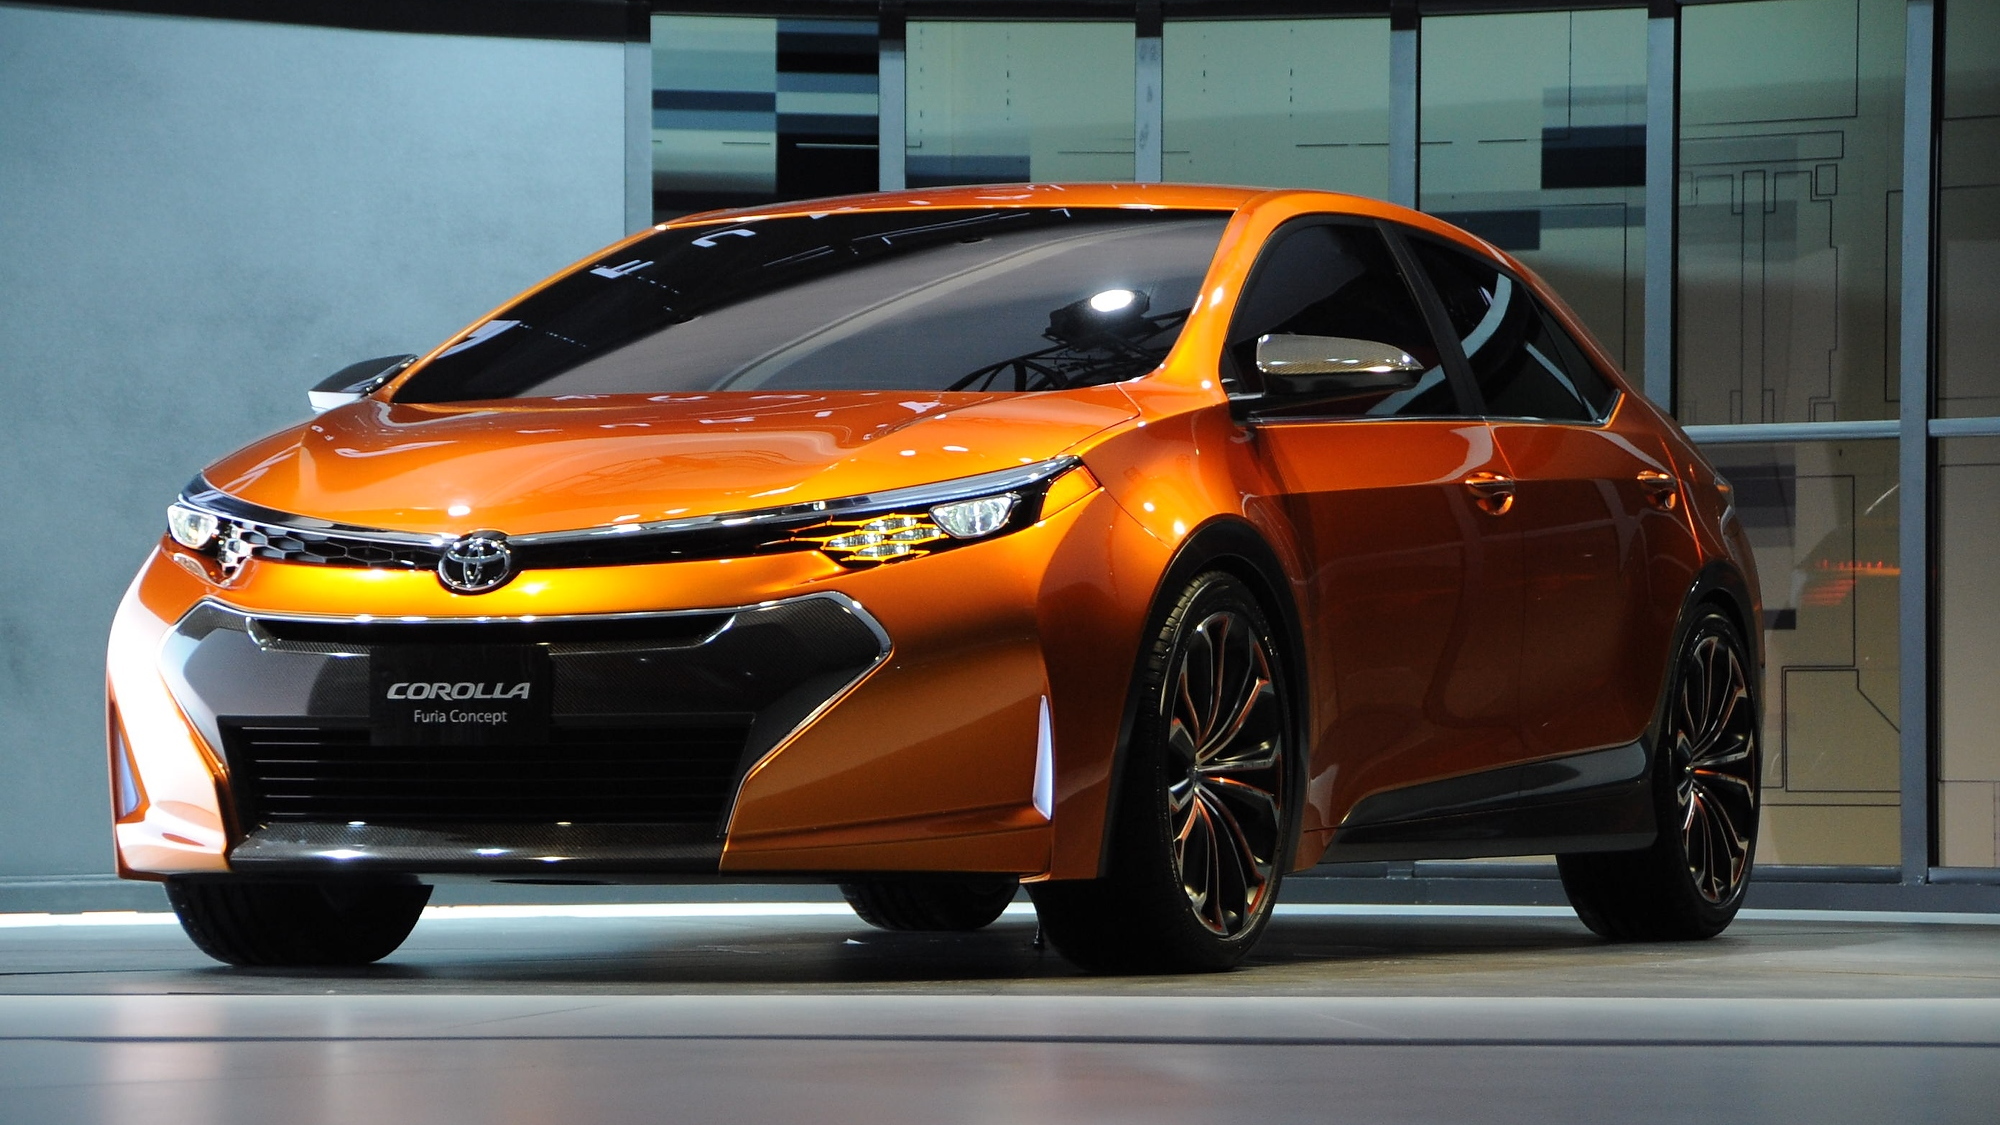 Toyota Furia Concept revealed at 2013 Detroit Auto Show